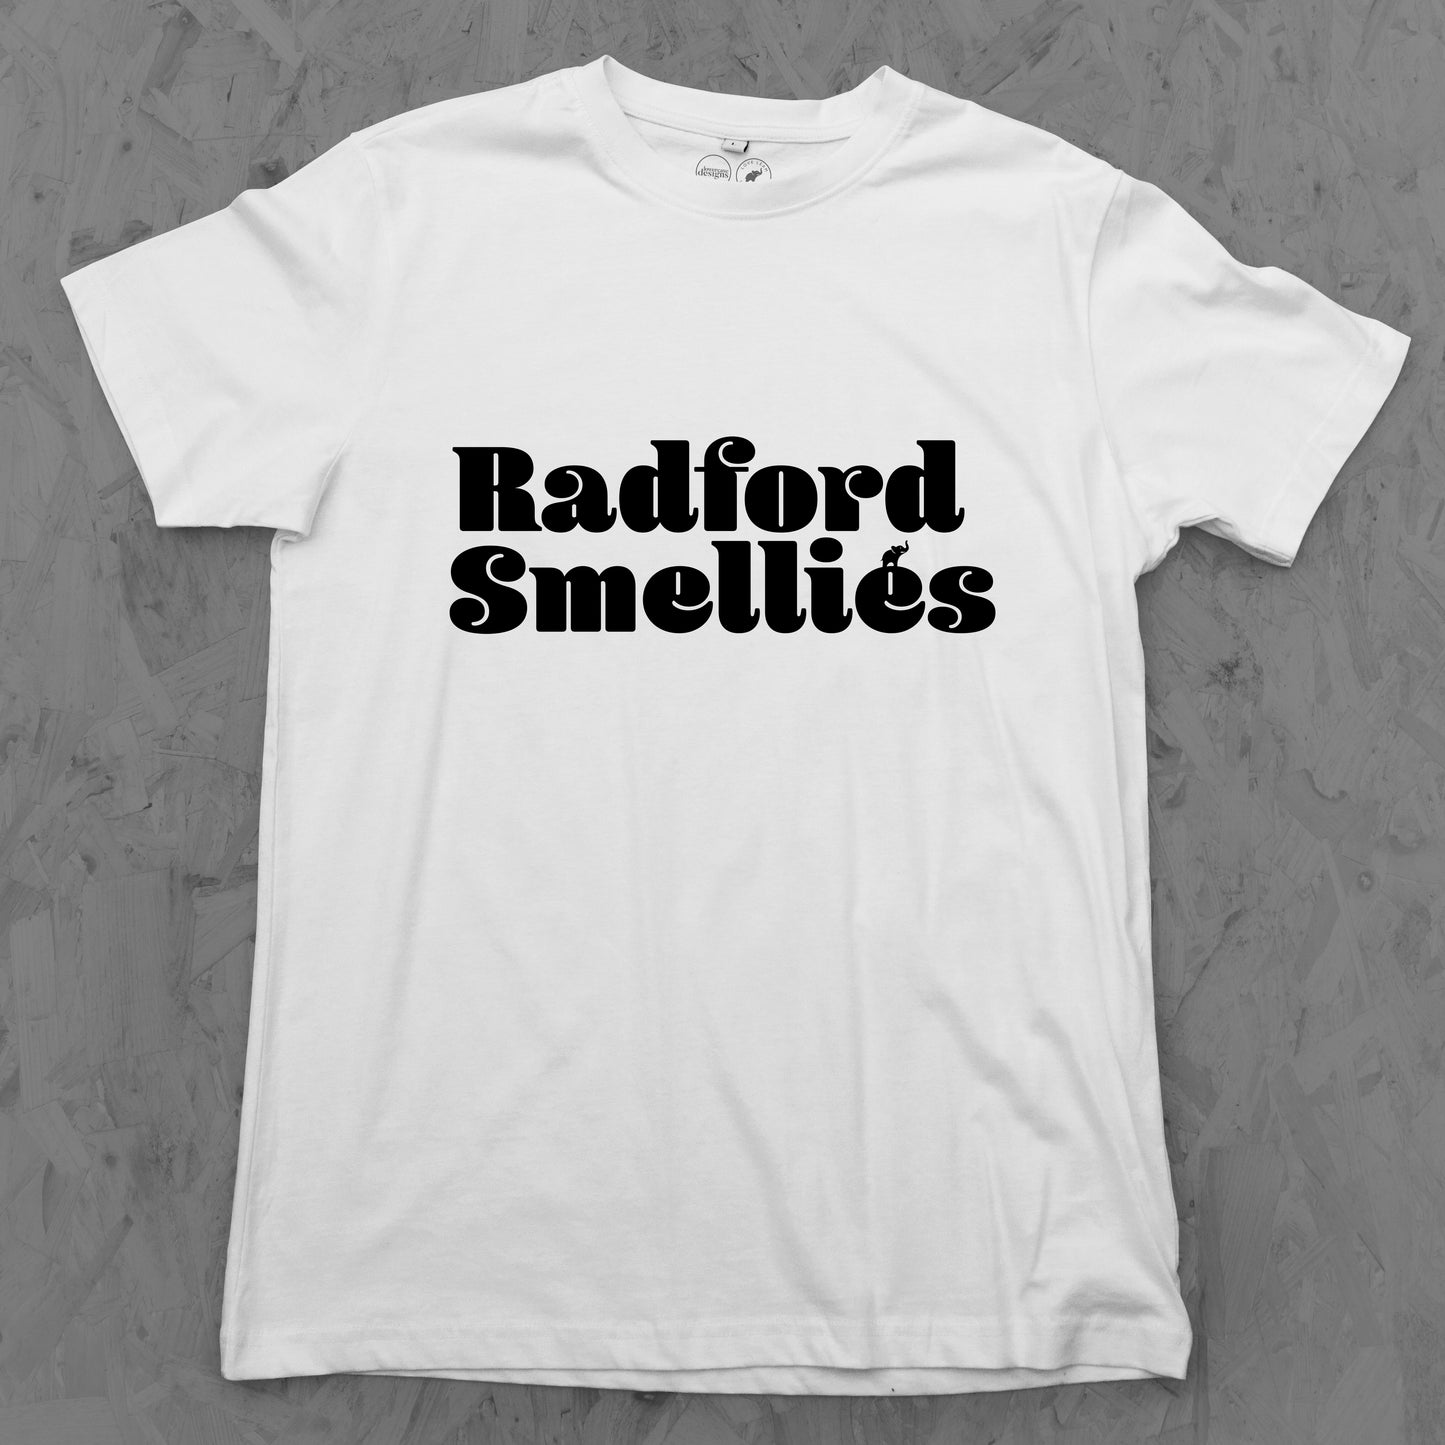 Radford Smellies Tee Child's sizes 3-14 years